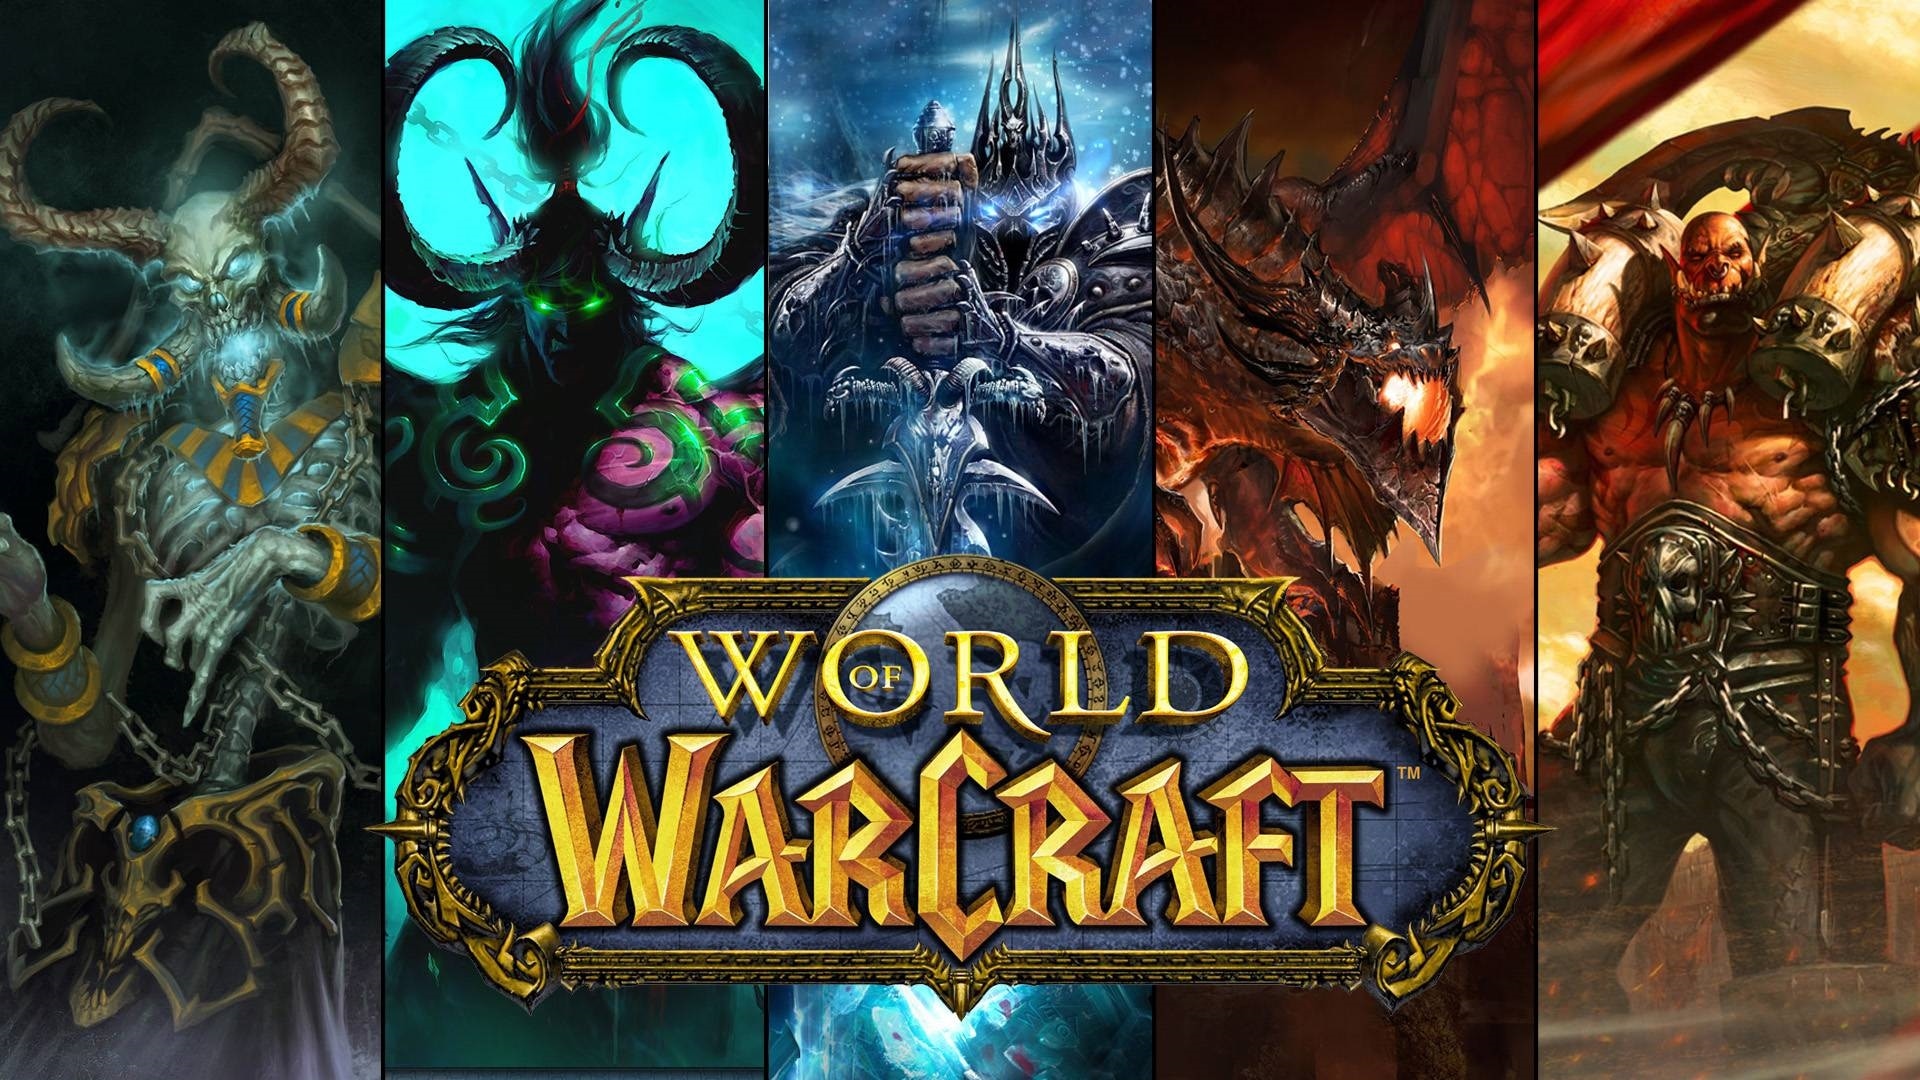 Steam Workshop::World of Warcraft filming props